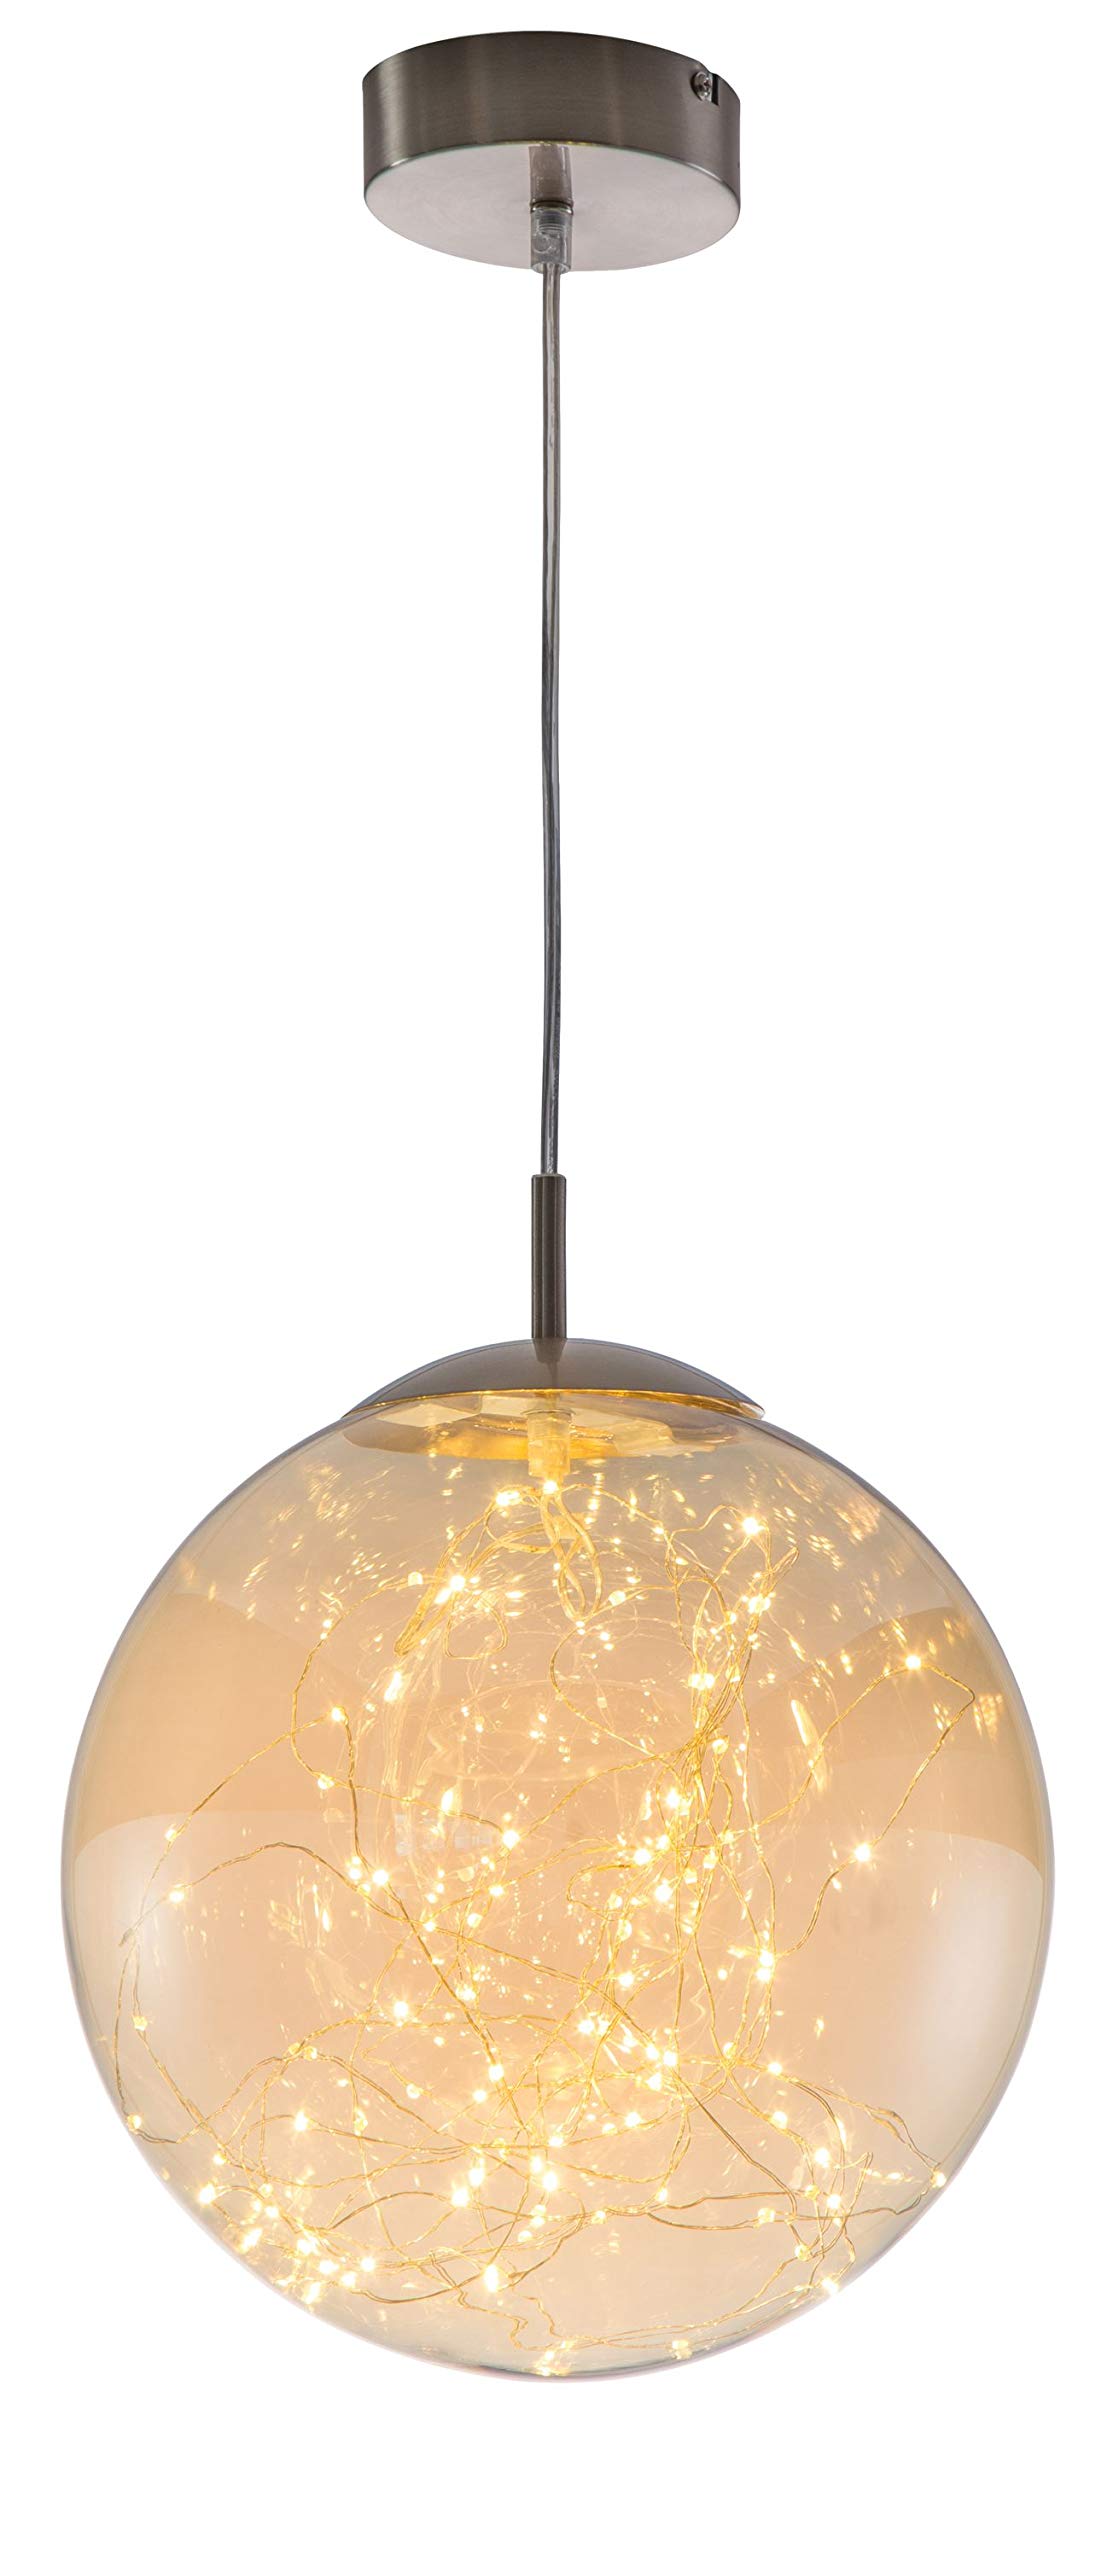 Nino Leuchten LED Hänge Decken Strahler Ess Zimmer Glas Kugel Form Pendel Decken Lampe Amber 34152523